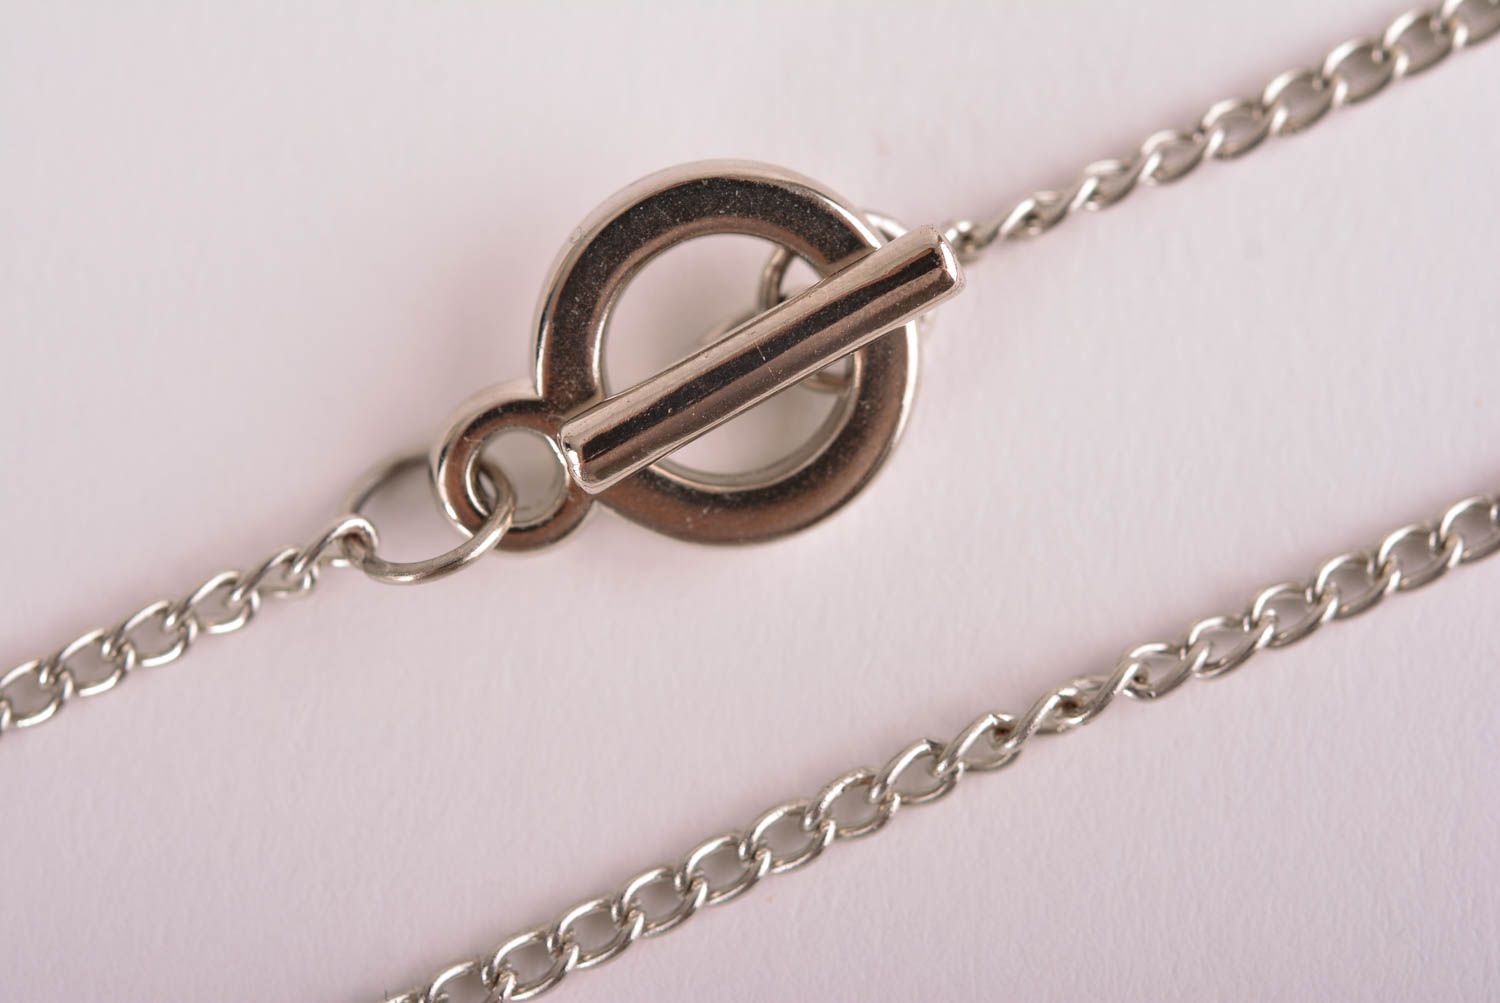 Handmade pendant unusual accessory for women gift ideas unusual gift ideas photo 5